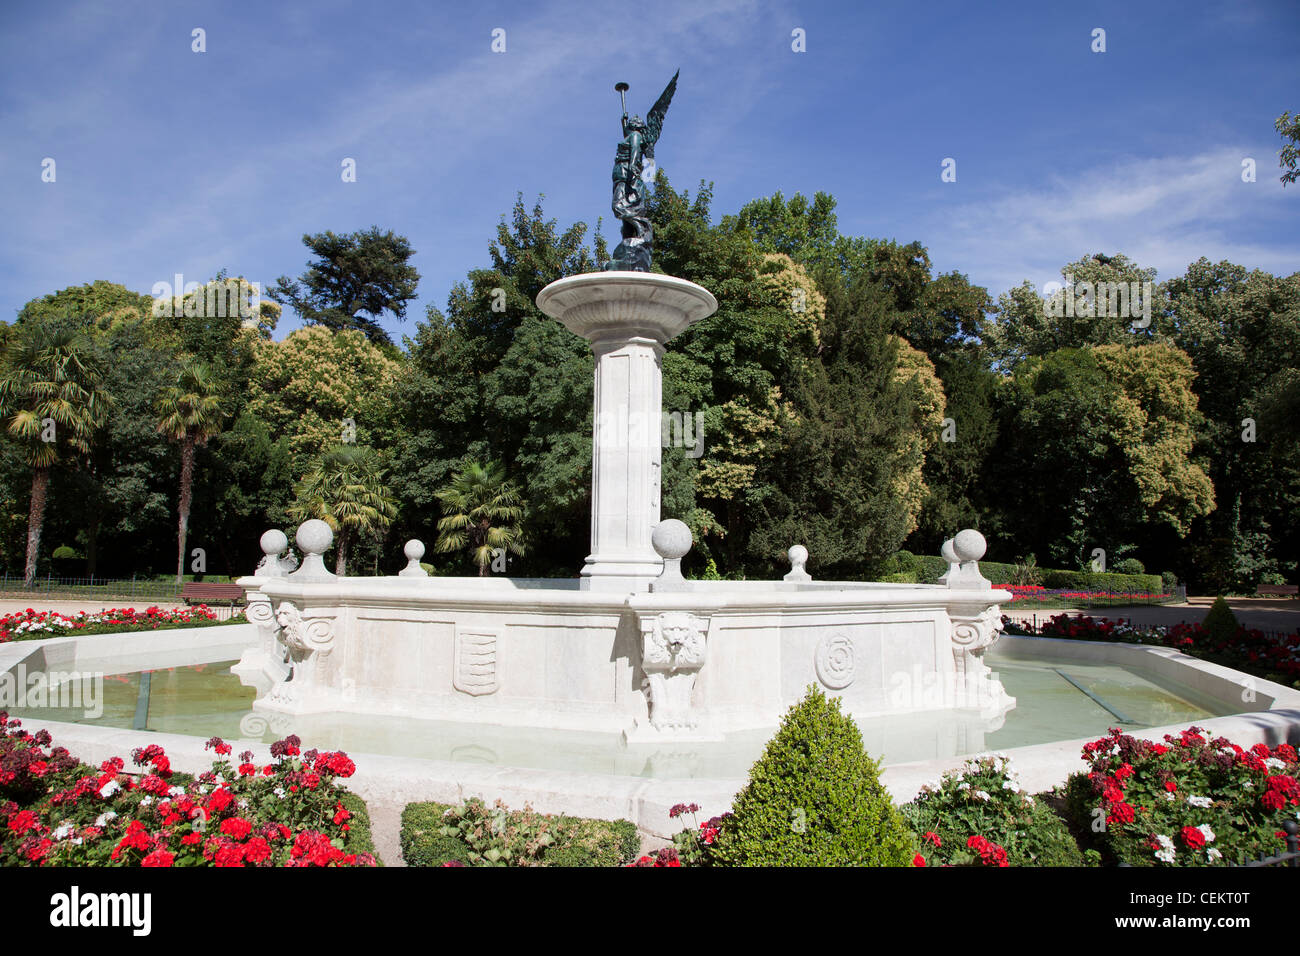 Spain, Valladolid, Botanic Gardens, Fountain Stock Photo